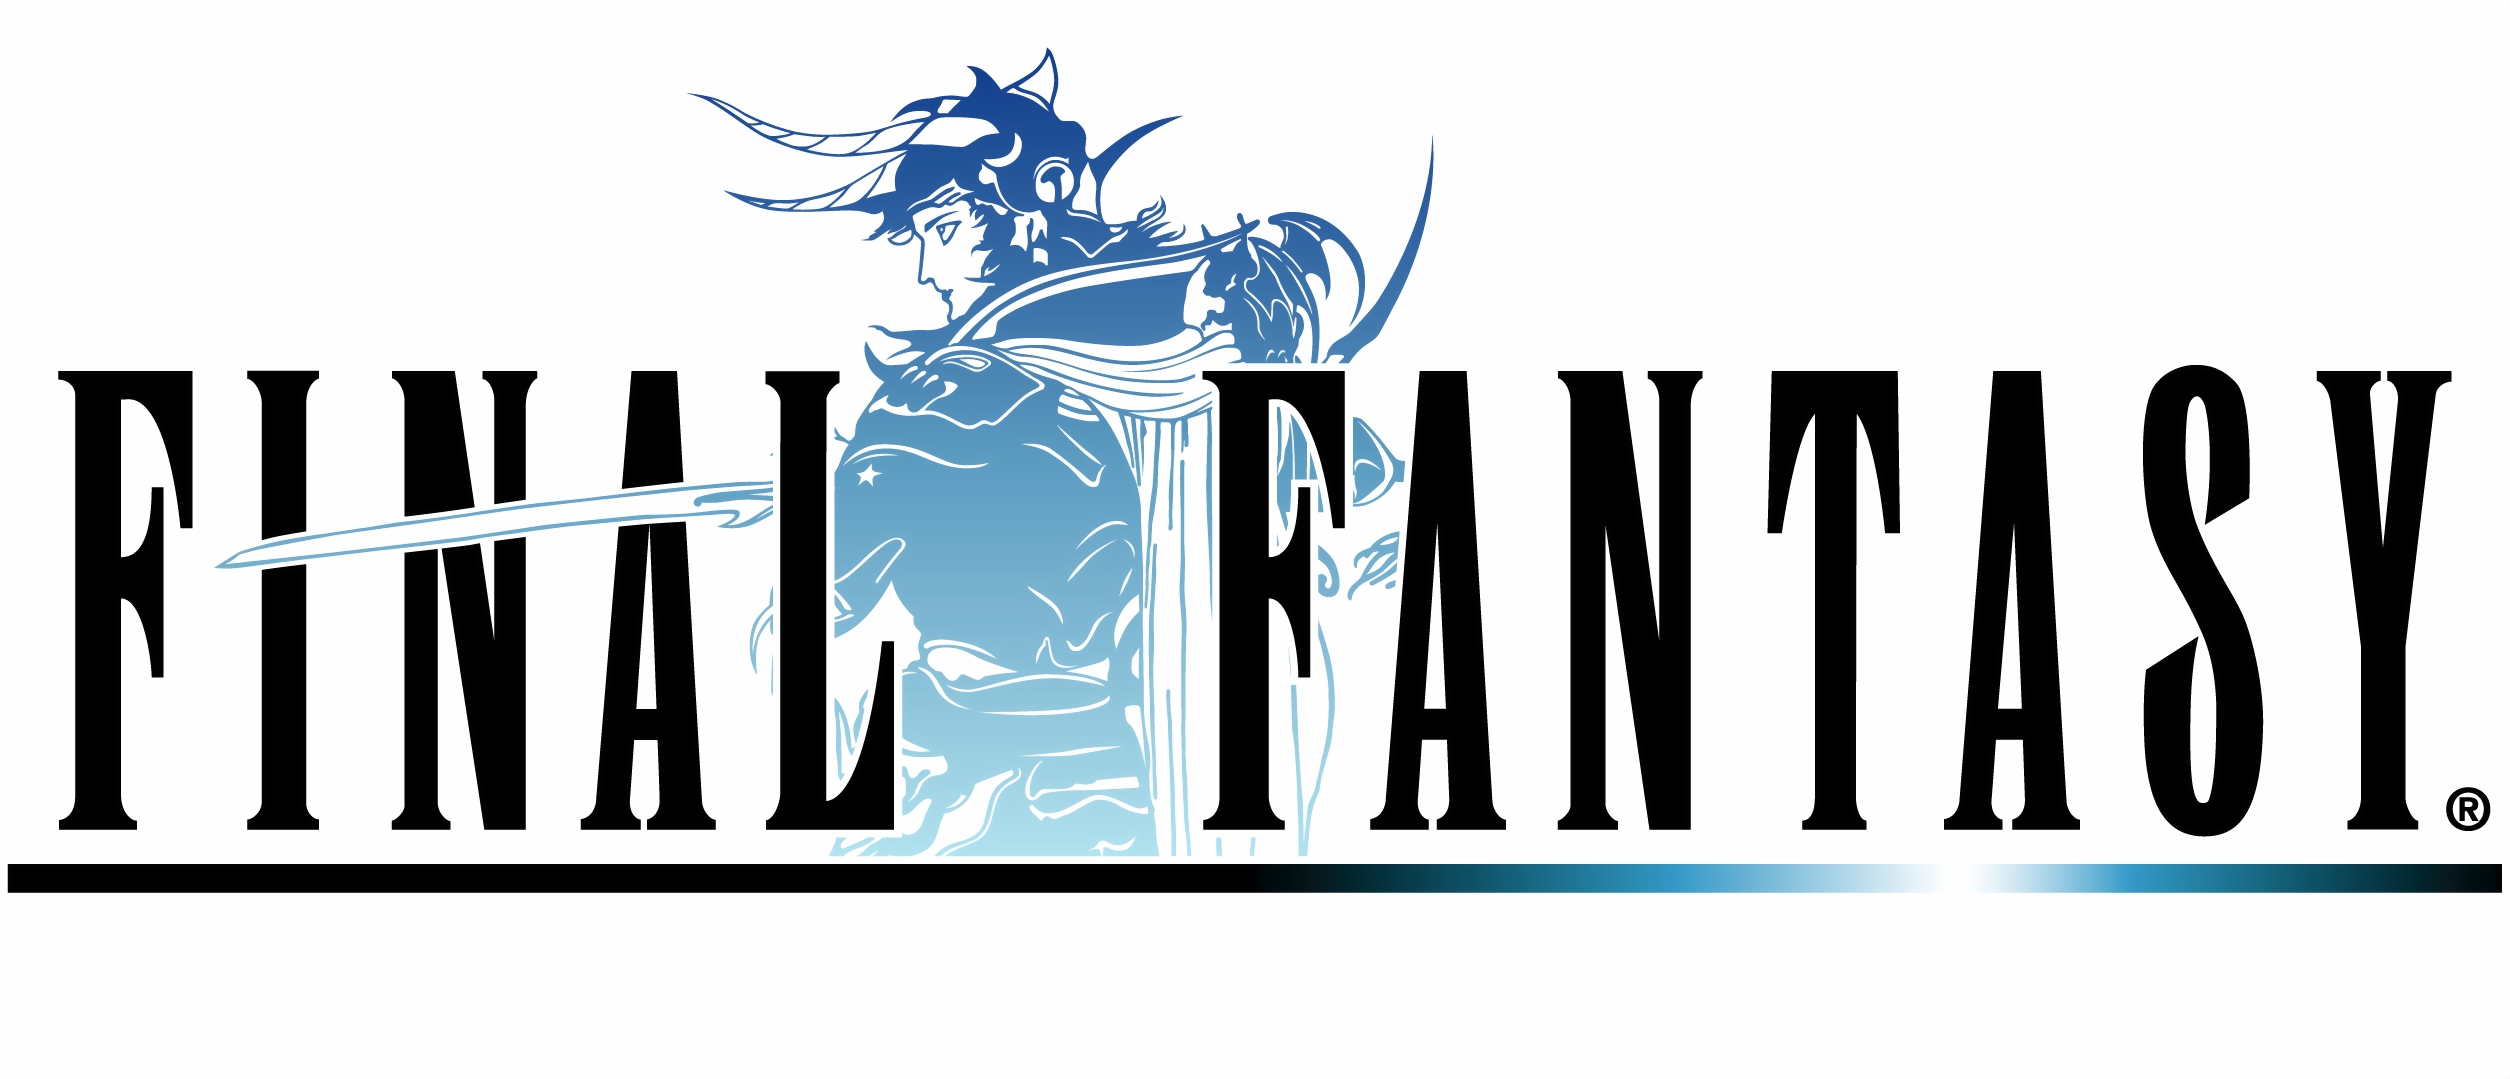 Arylon Final Fantasy